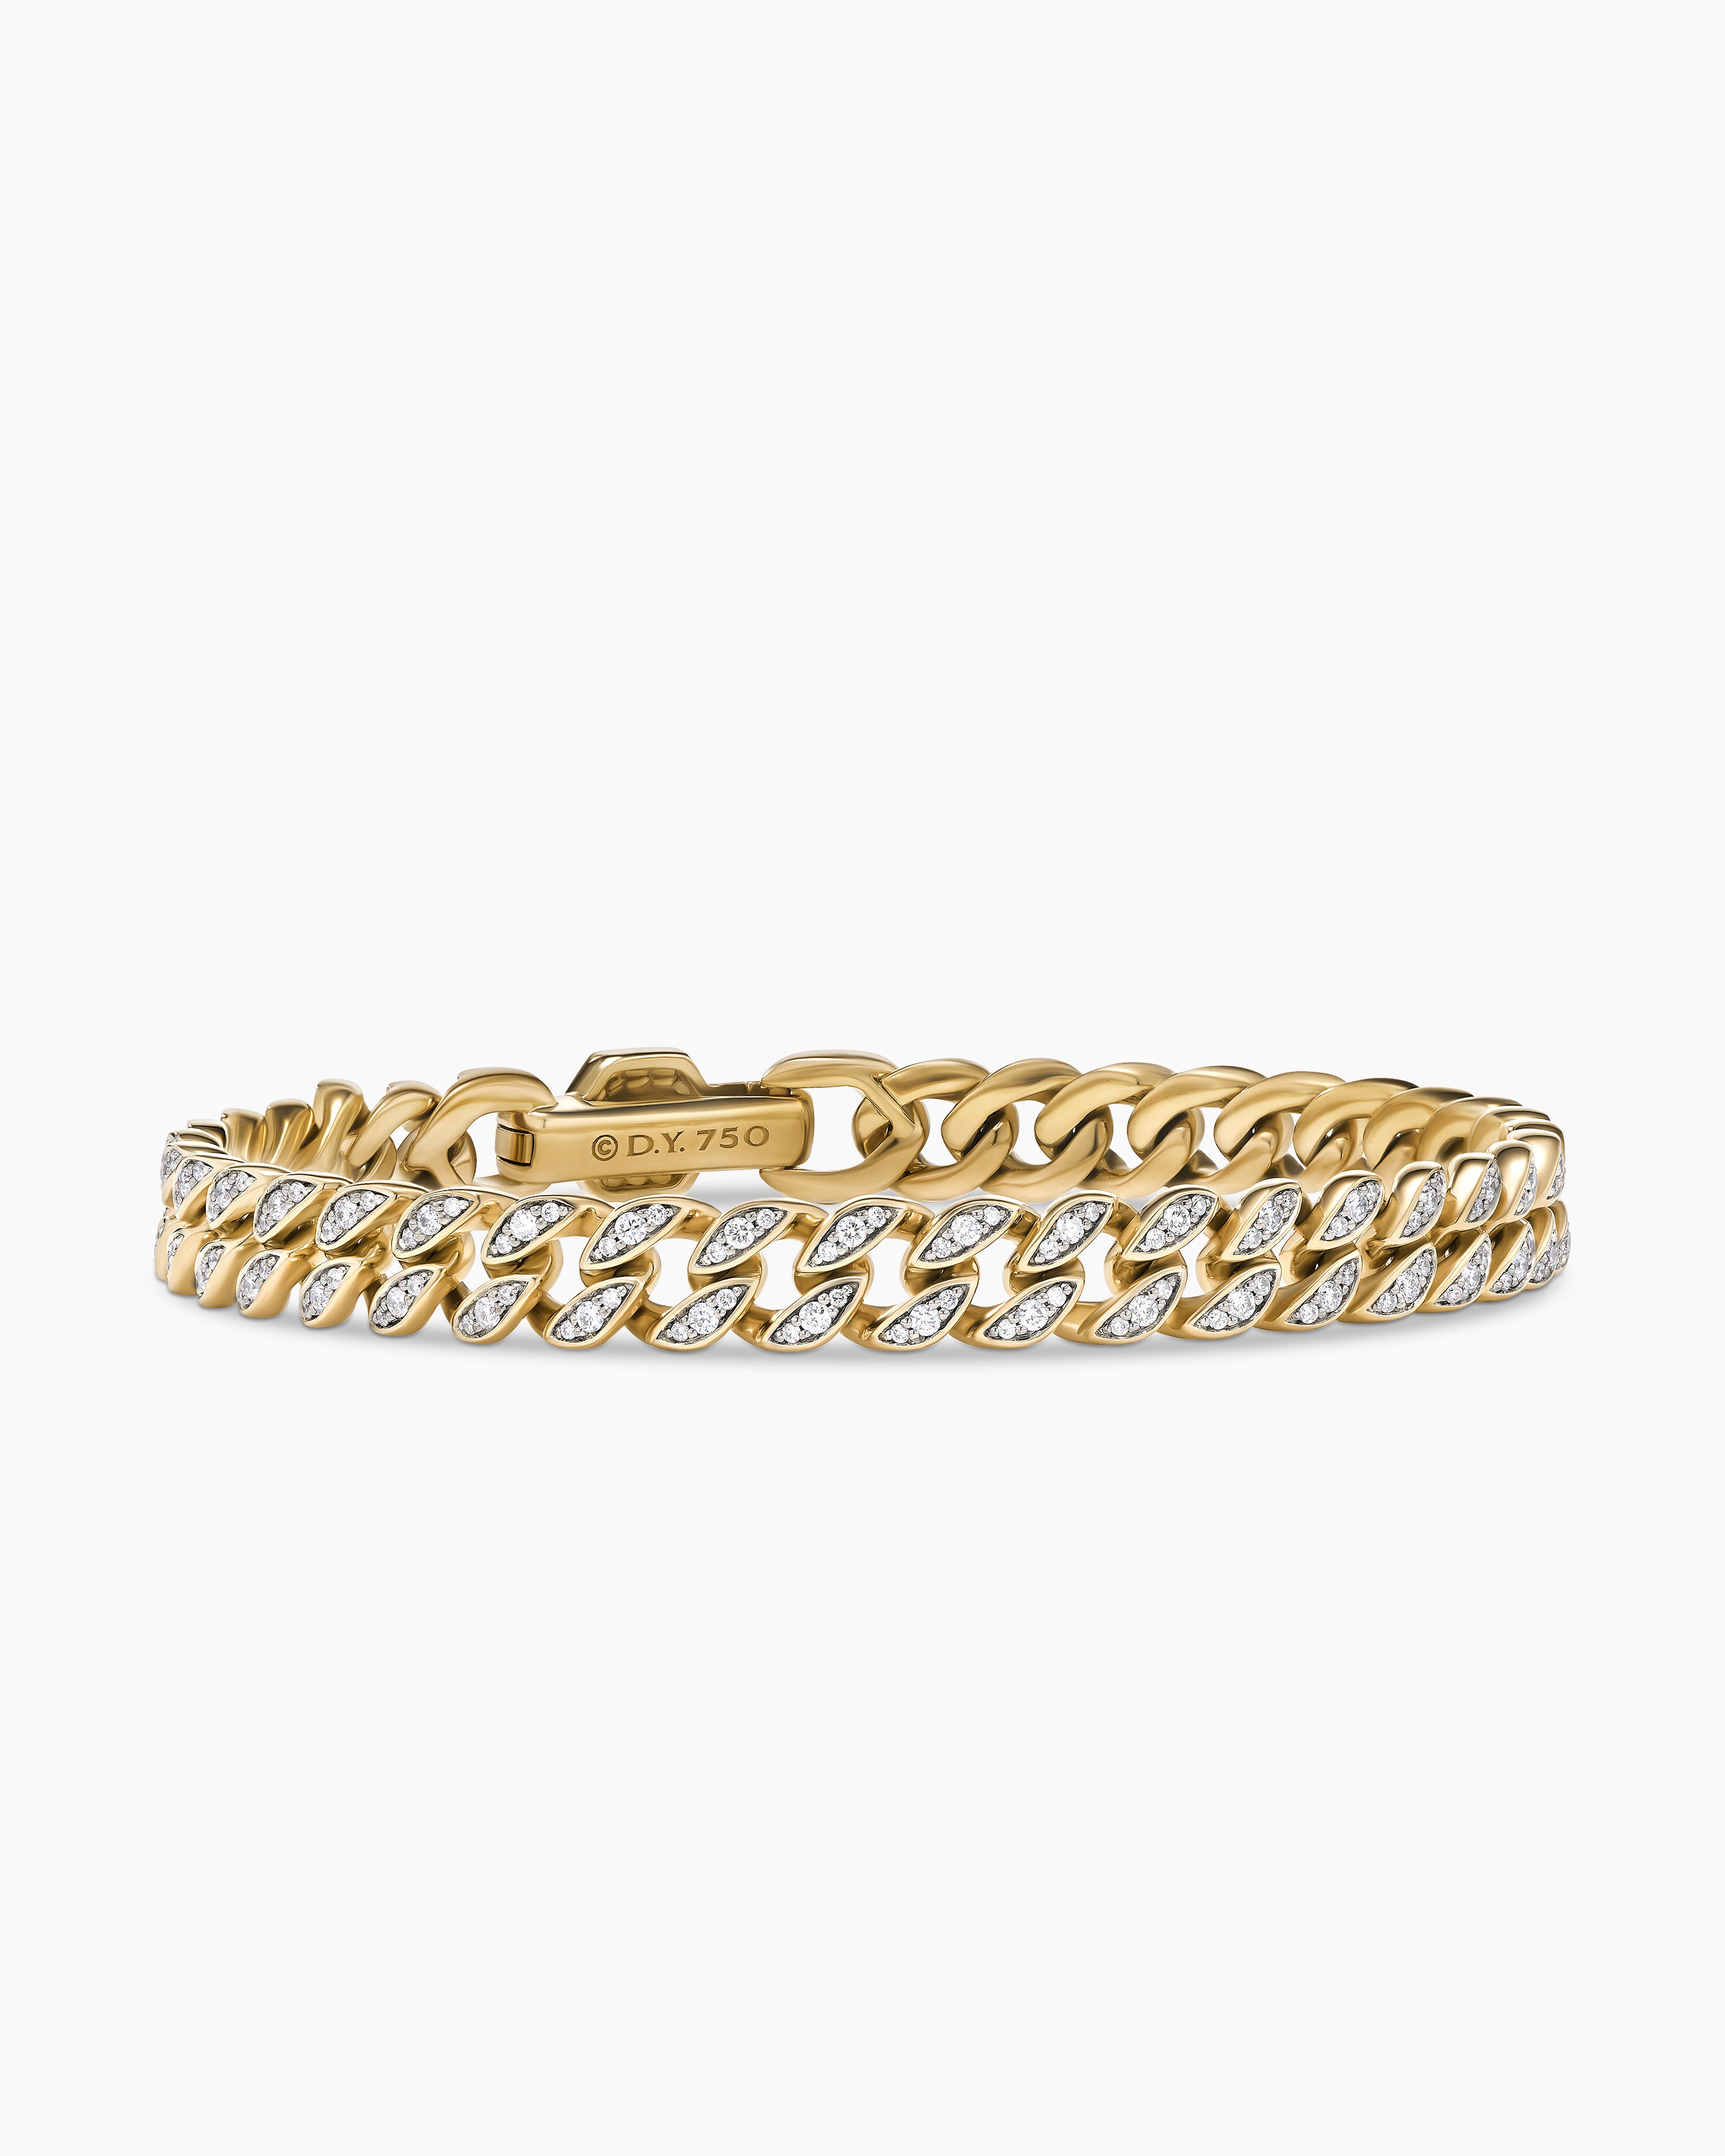 Curb Chain Bracelet in 18K Yellow Gold with Diamonds, 7mm | David Yurman